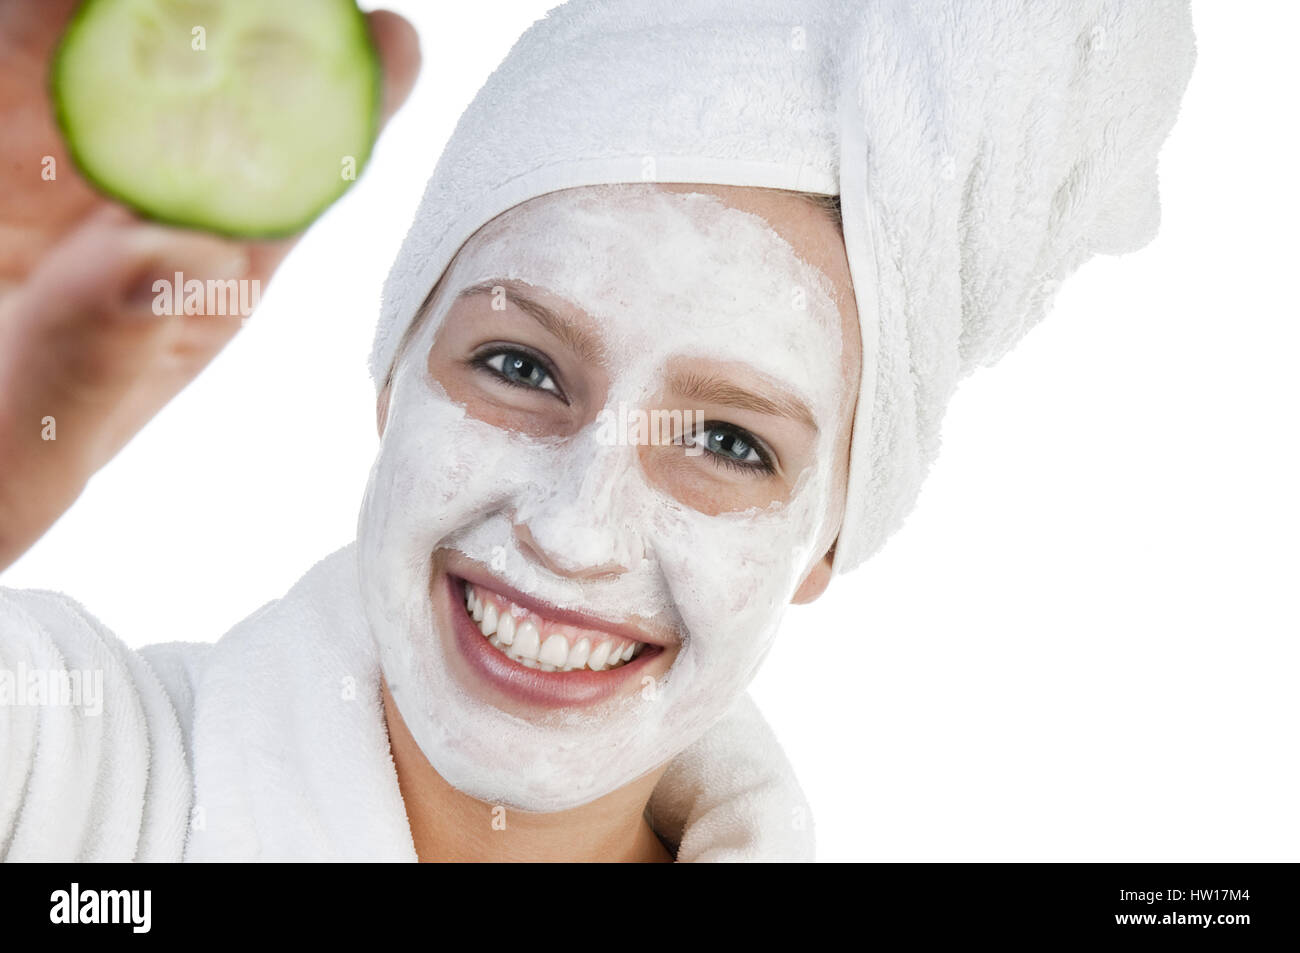 Beauty care, woman with cucumber mask, Schönheitspflege, Frau mit Gurkenmaske Stock Photo